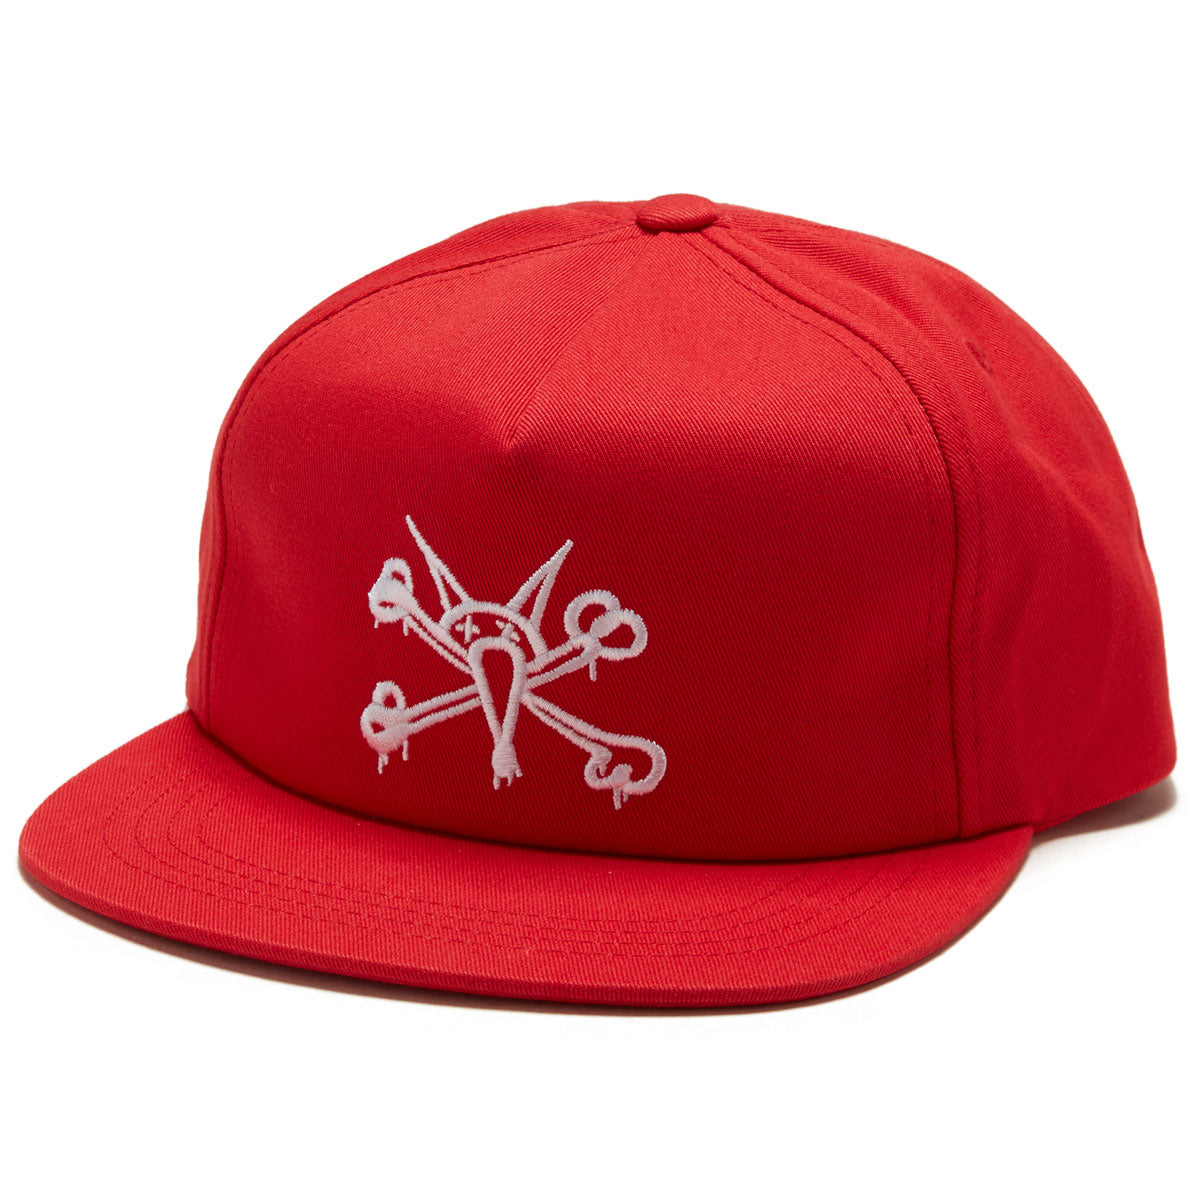 Powell-Peralta Vato Rat Snapback Hat - Red image 1